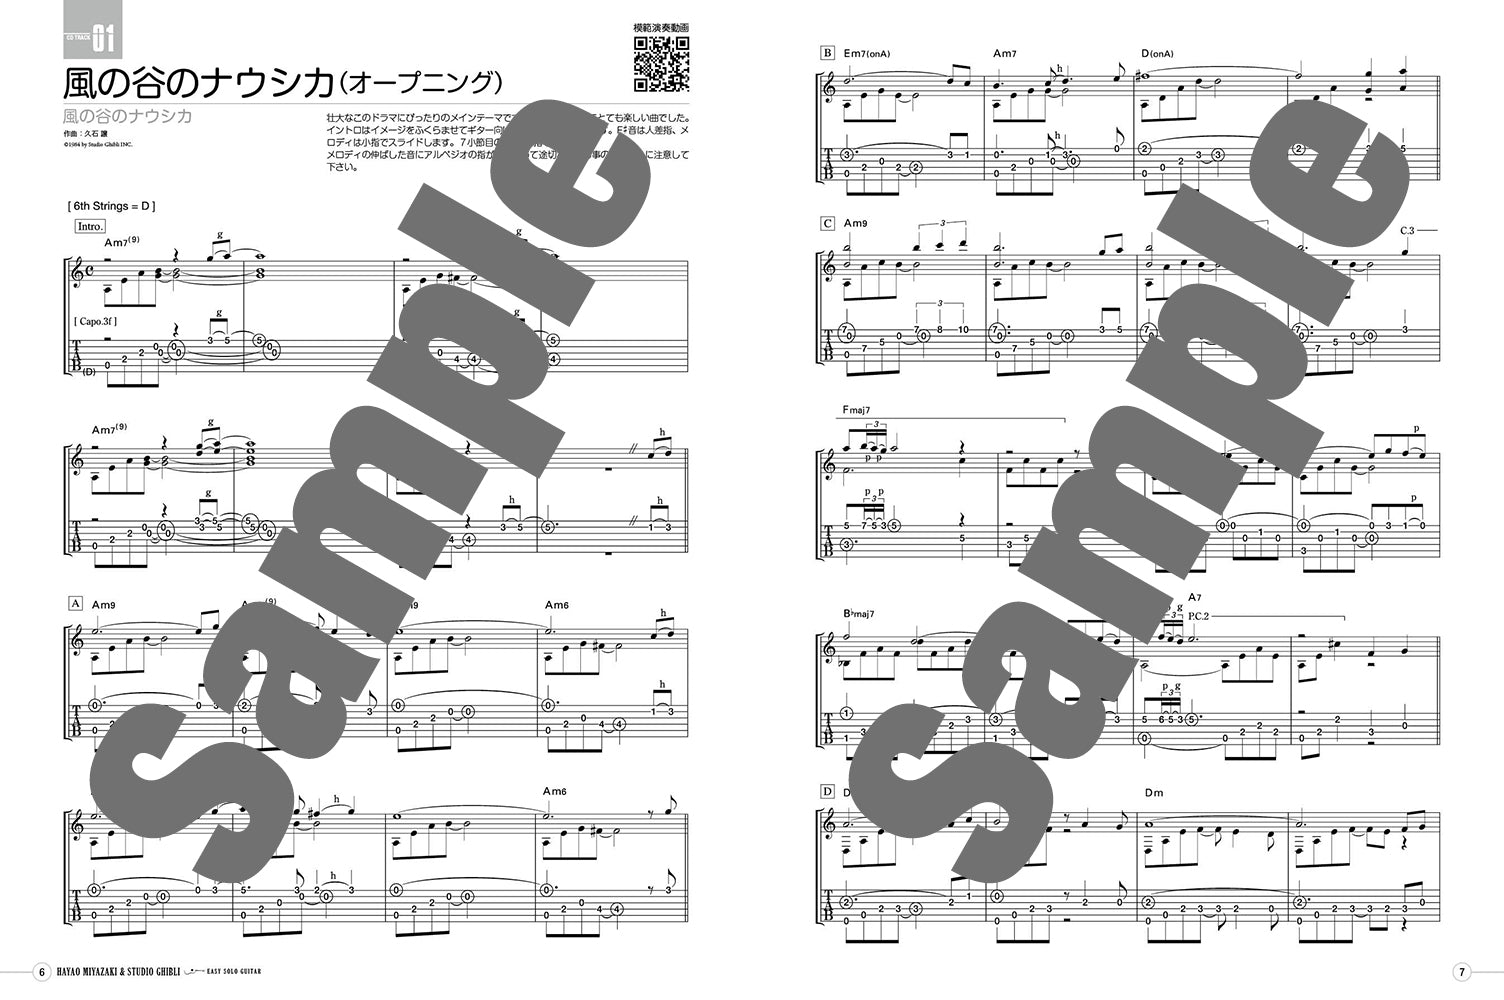 Studio Ghibli Hayao Miyazaki - Guitar Solo Score Book plus CD 吉他彈奏宮崎駿&吉卜力動畫樂曲樂譜集：附CD